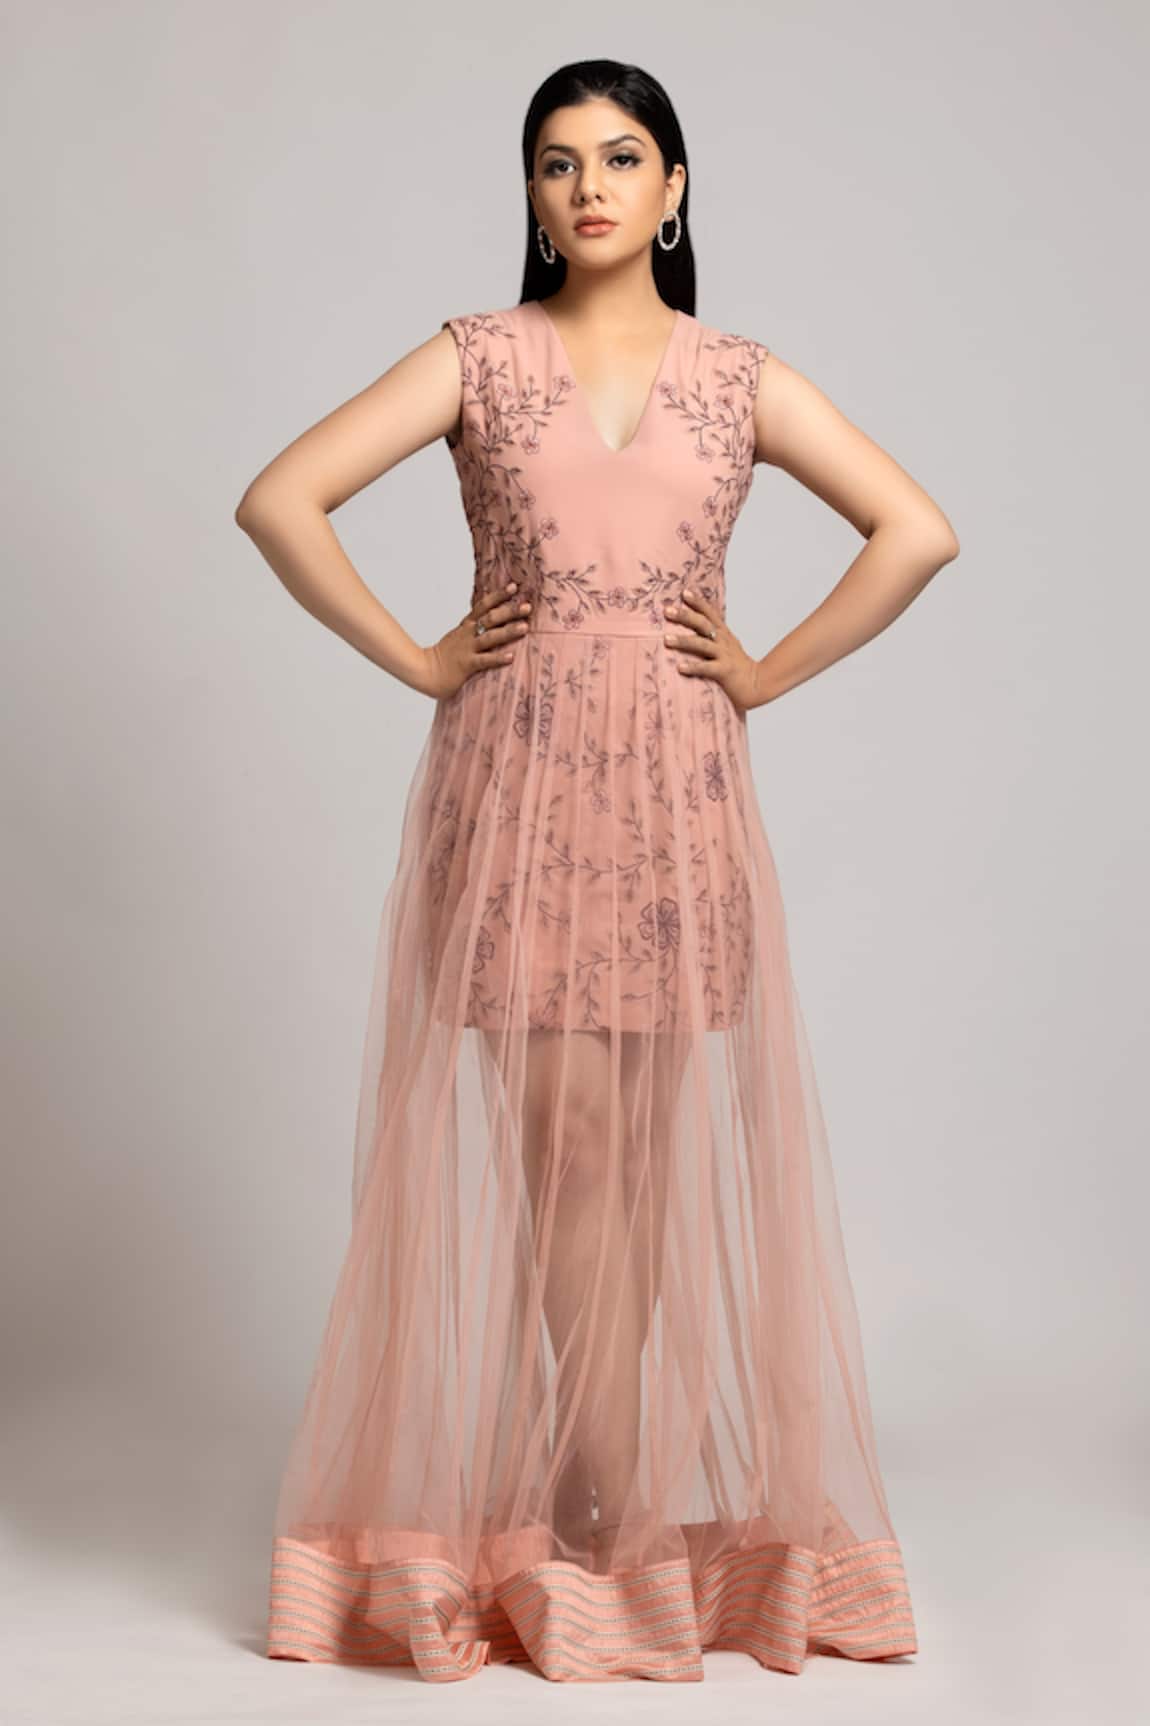 Saree Se Gown Design  Net Ki Saree Se Gown  Frock Design For Girl